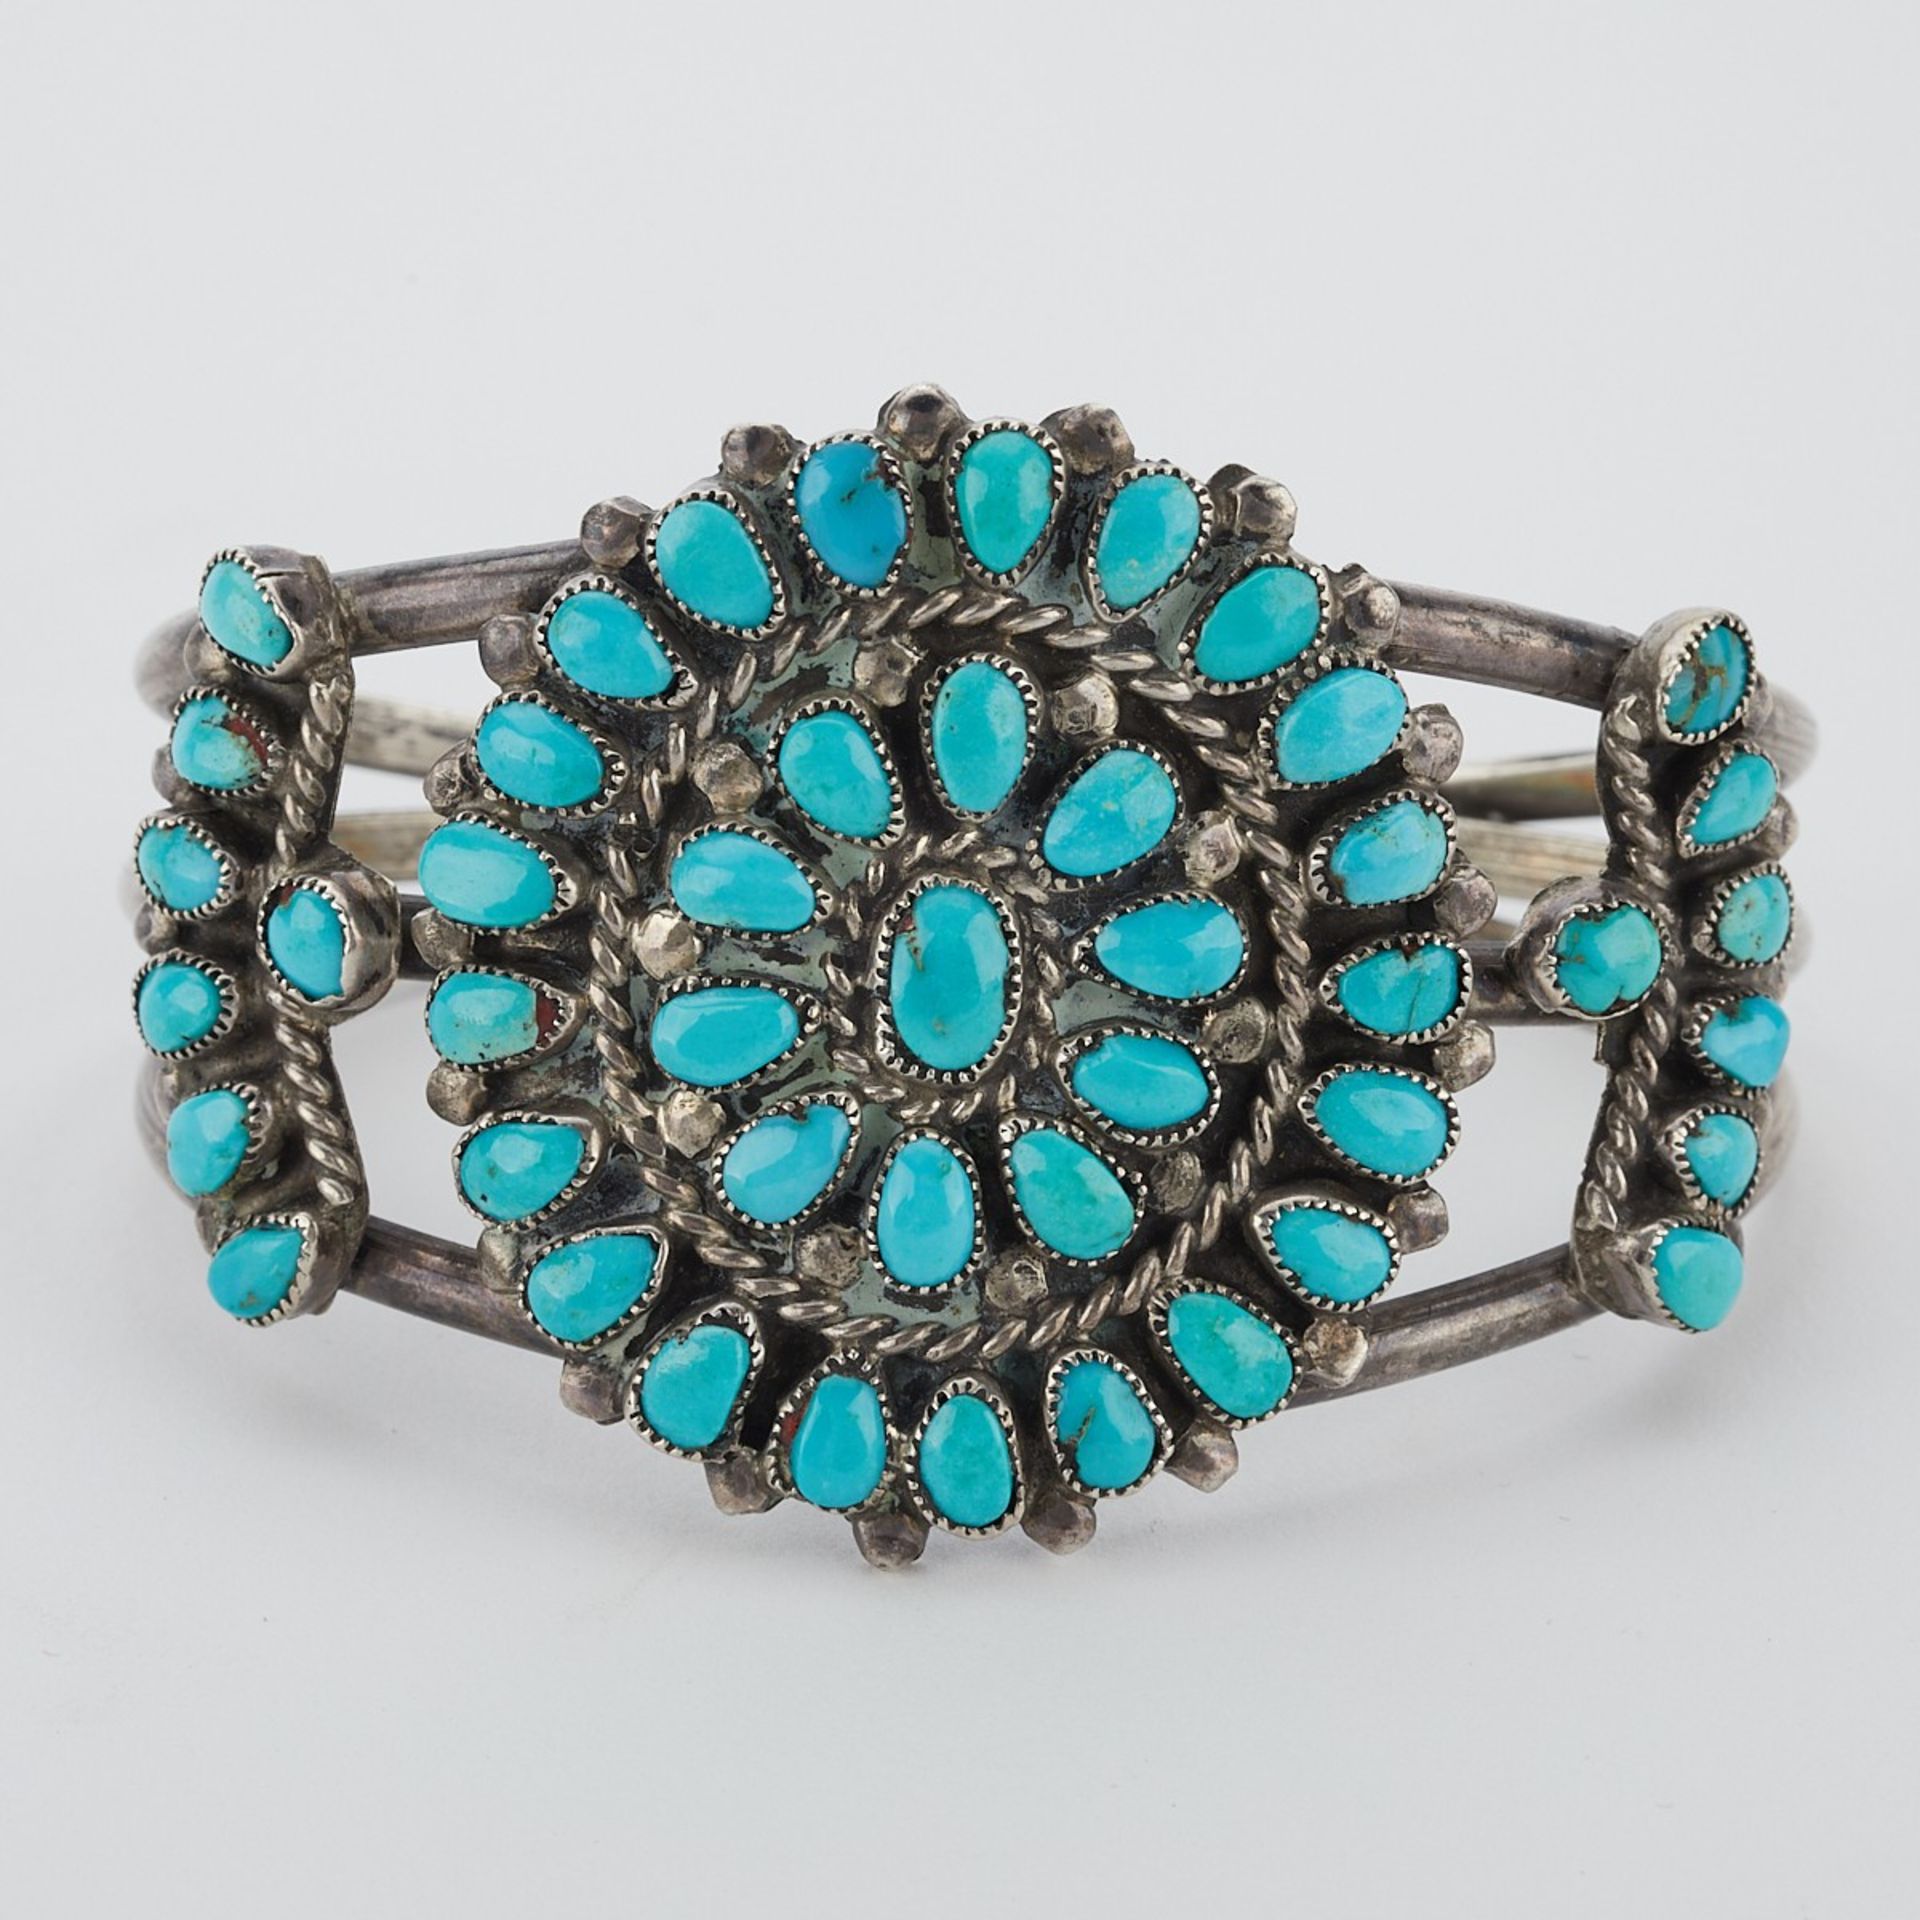 Group of 5 Southwest Turquoise Bracelet Cuffs - Image 7 of 10